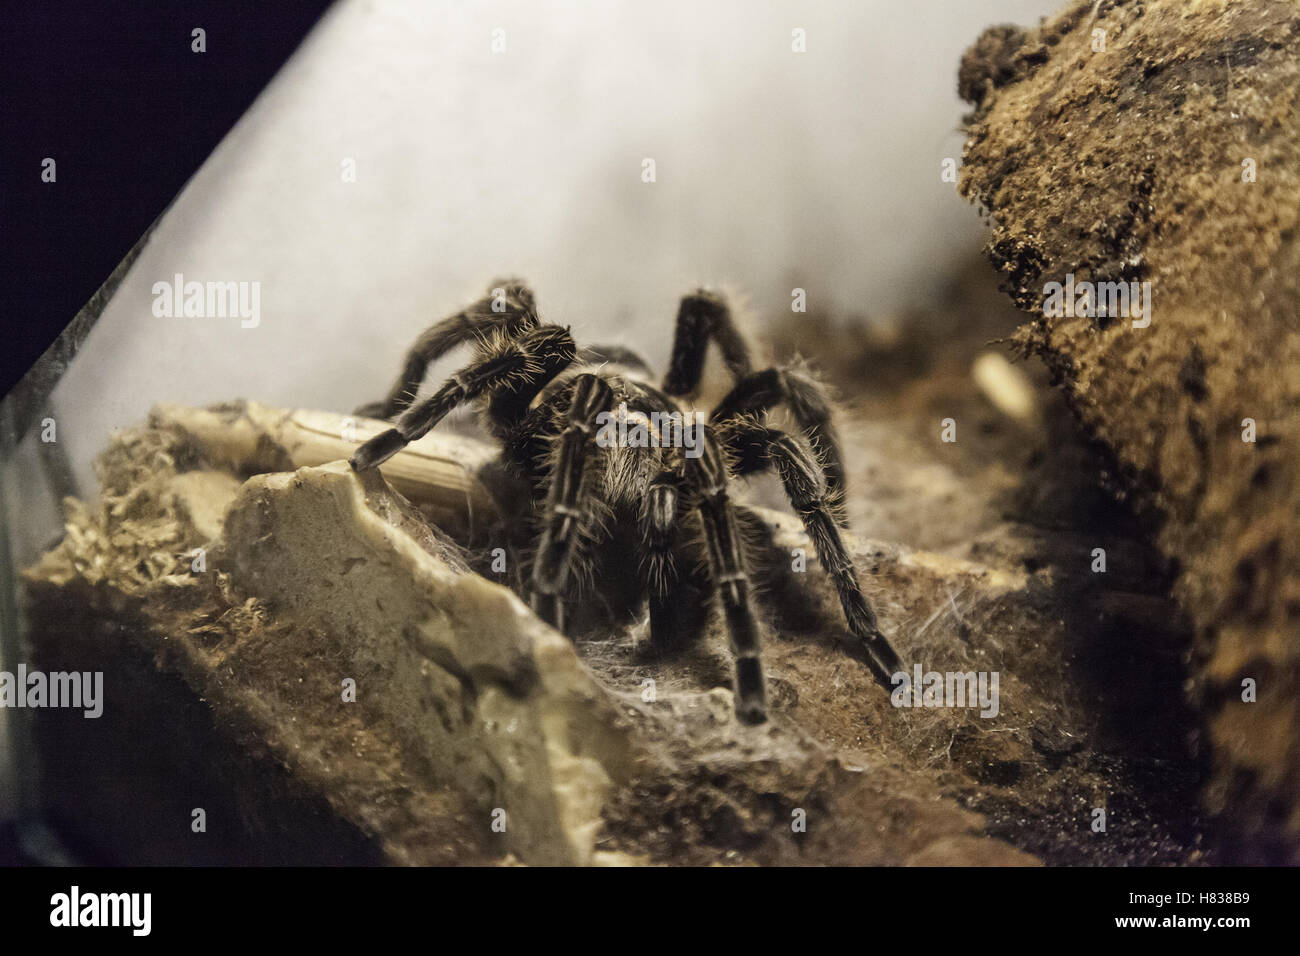 Poisonous and dangerous spider in terrarium, nature Stock Photo